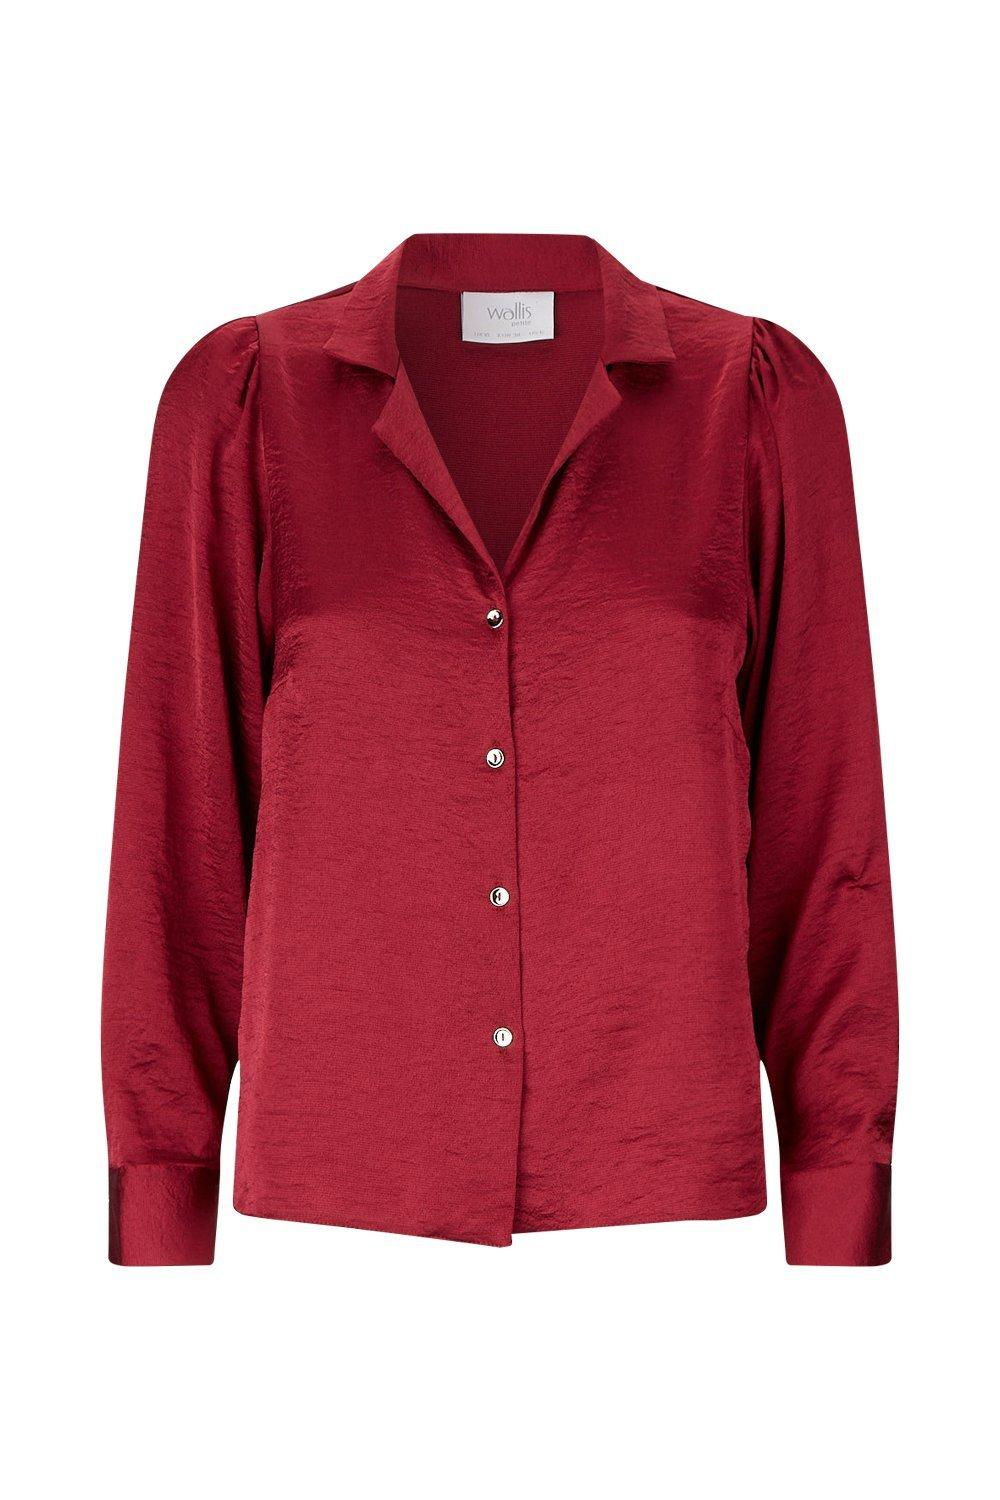 Wallis Berry Satin Shirt €18, visit wallisfashion.com